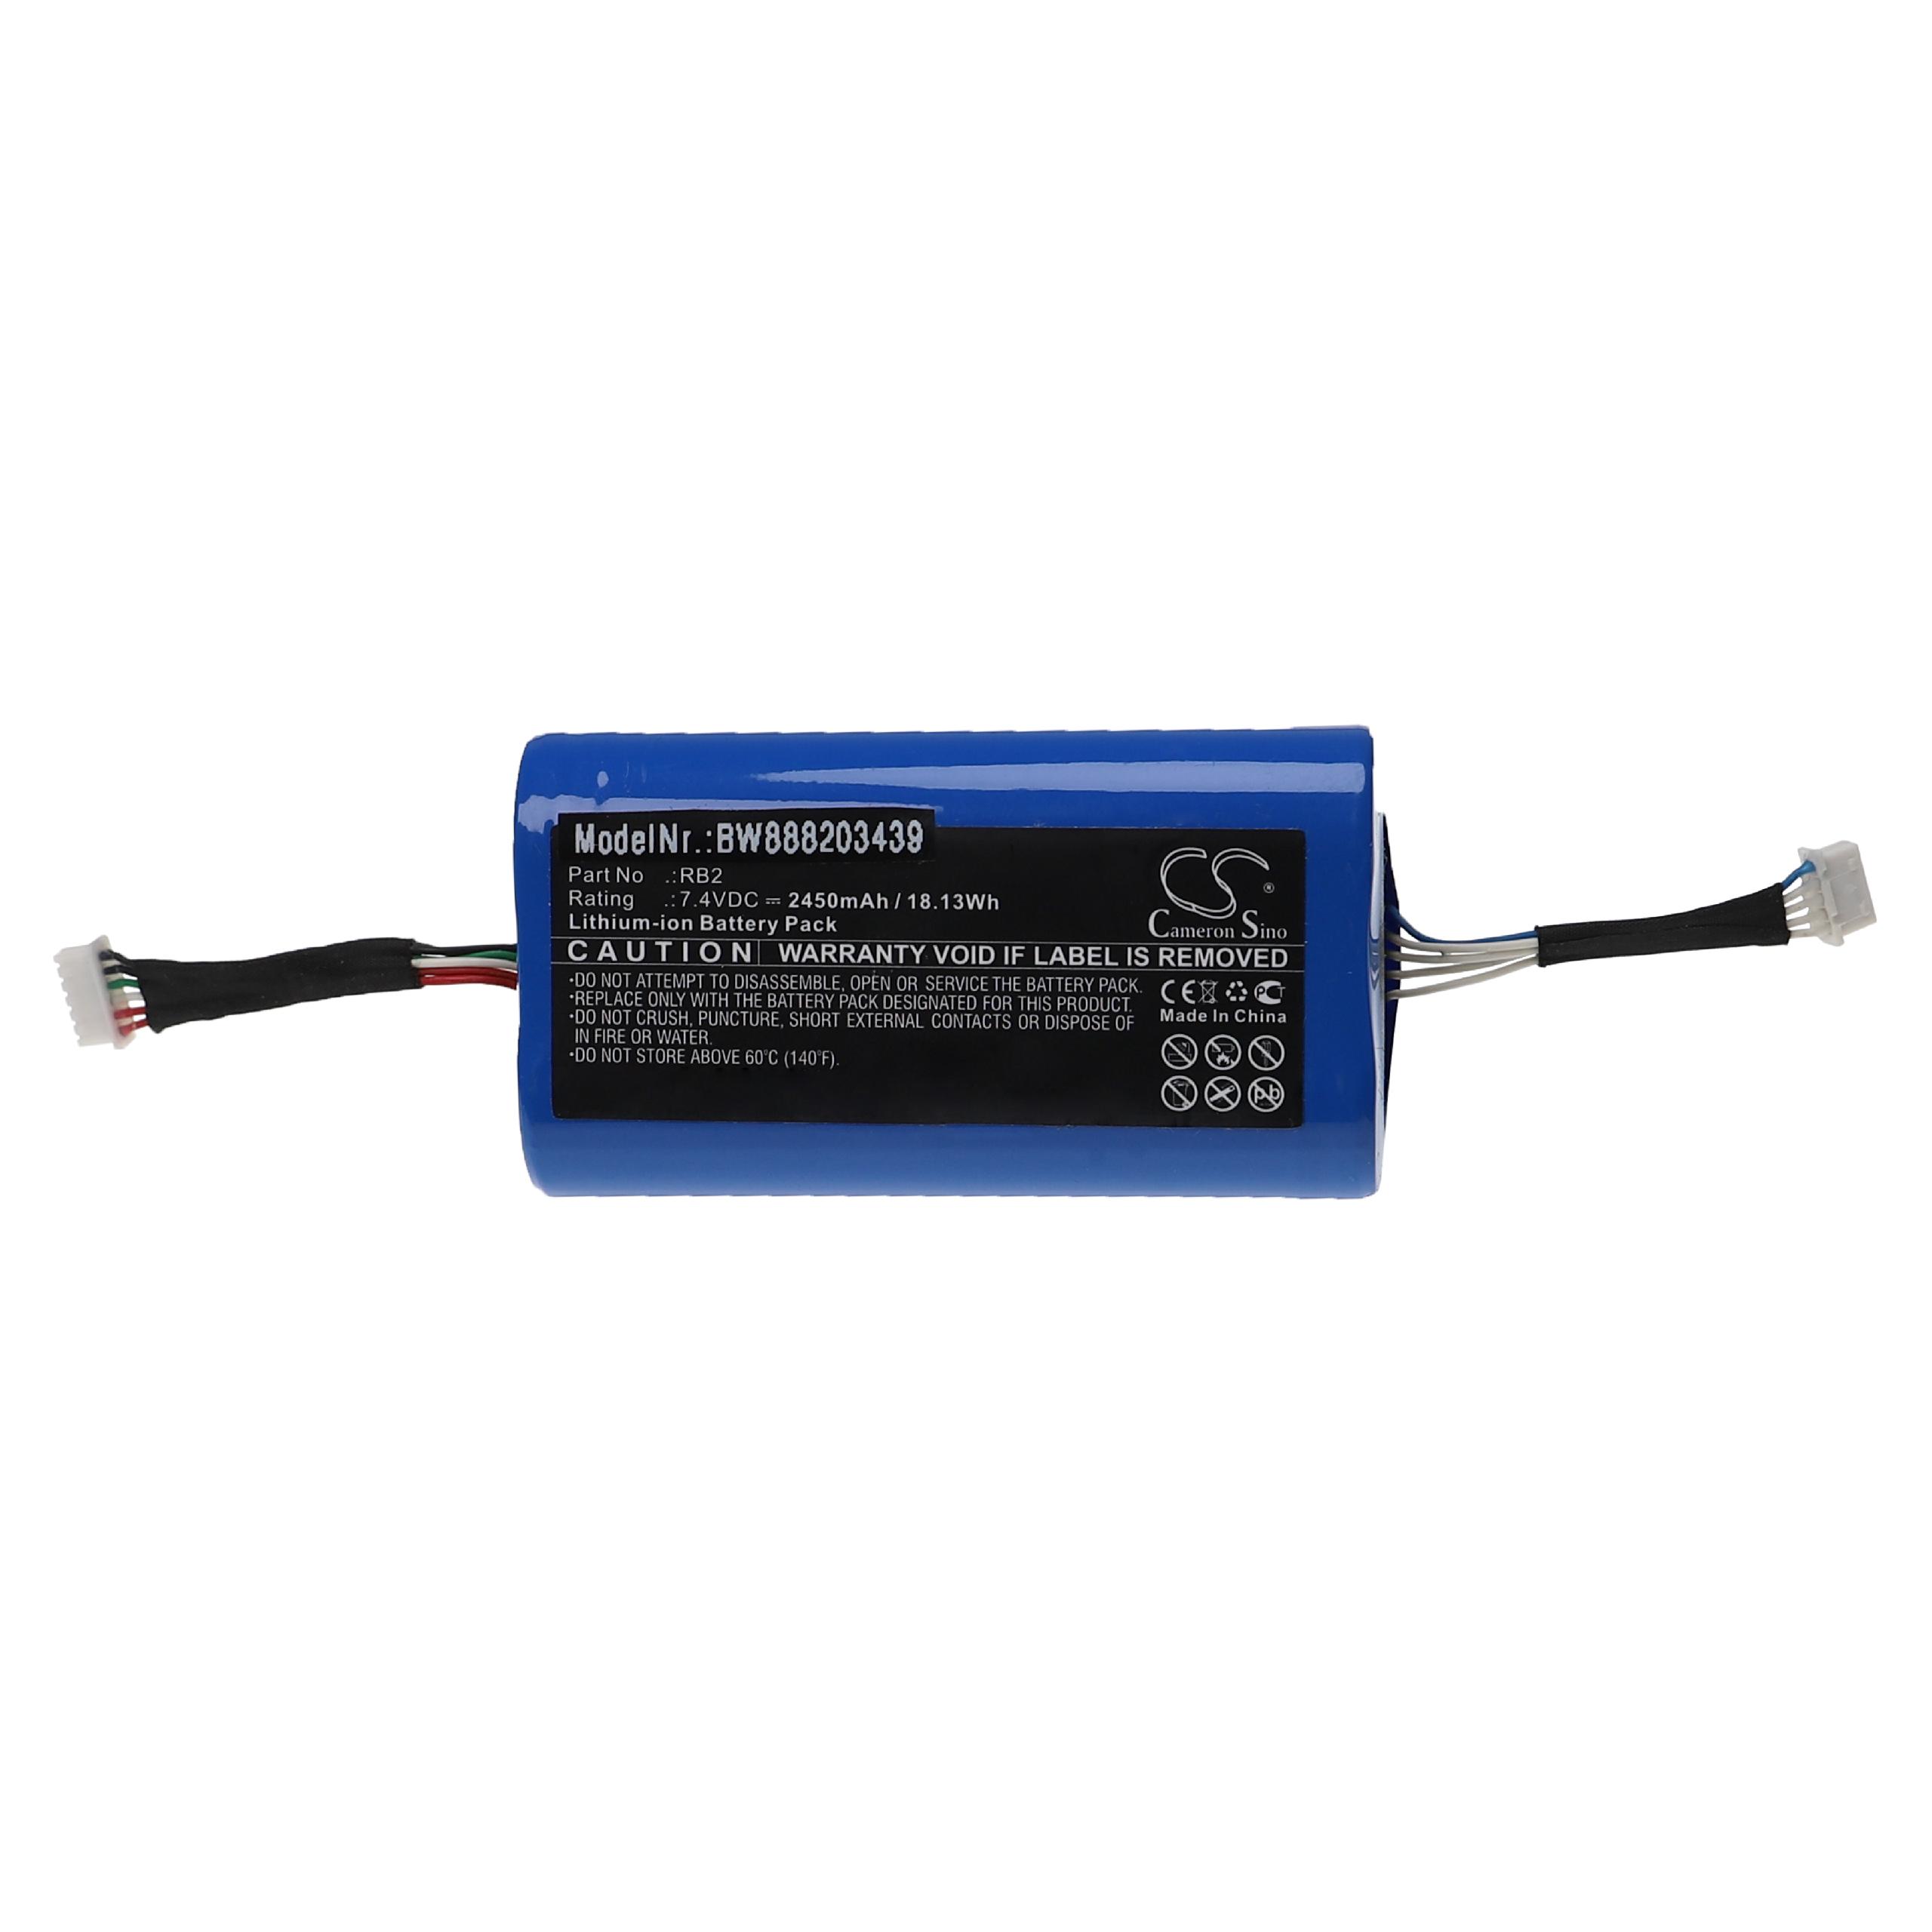 Batterie remplace DJI RB2 pour stabilisateur Gimbal - 2450mAh 7,4V Li-ion